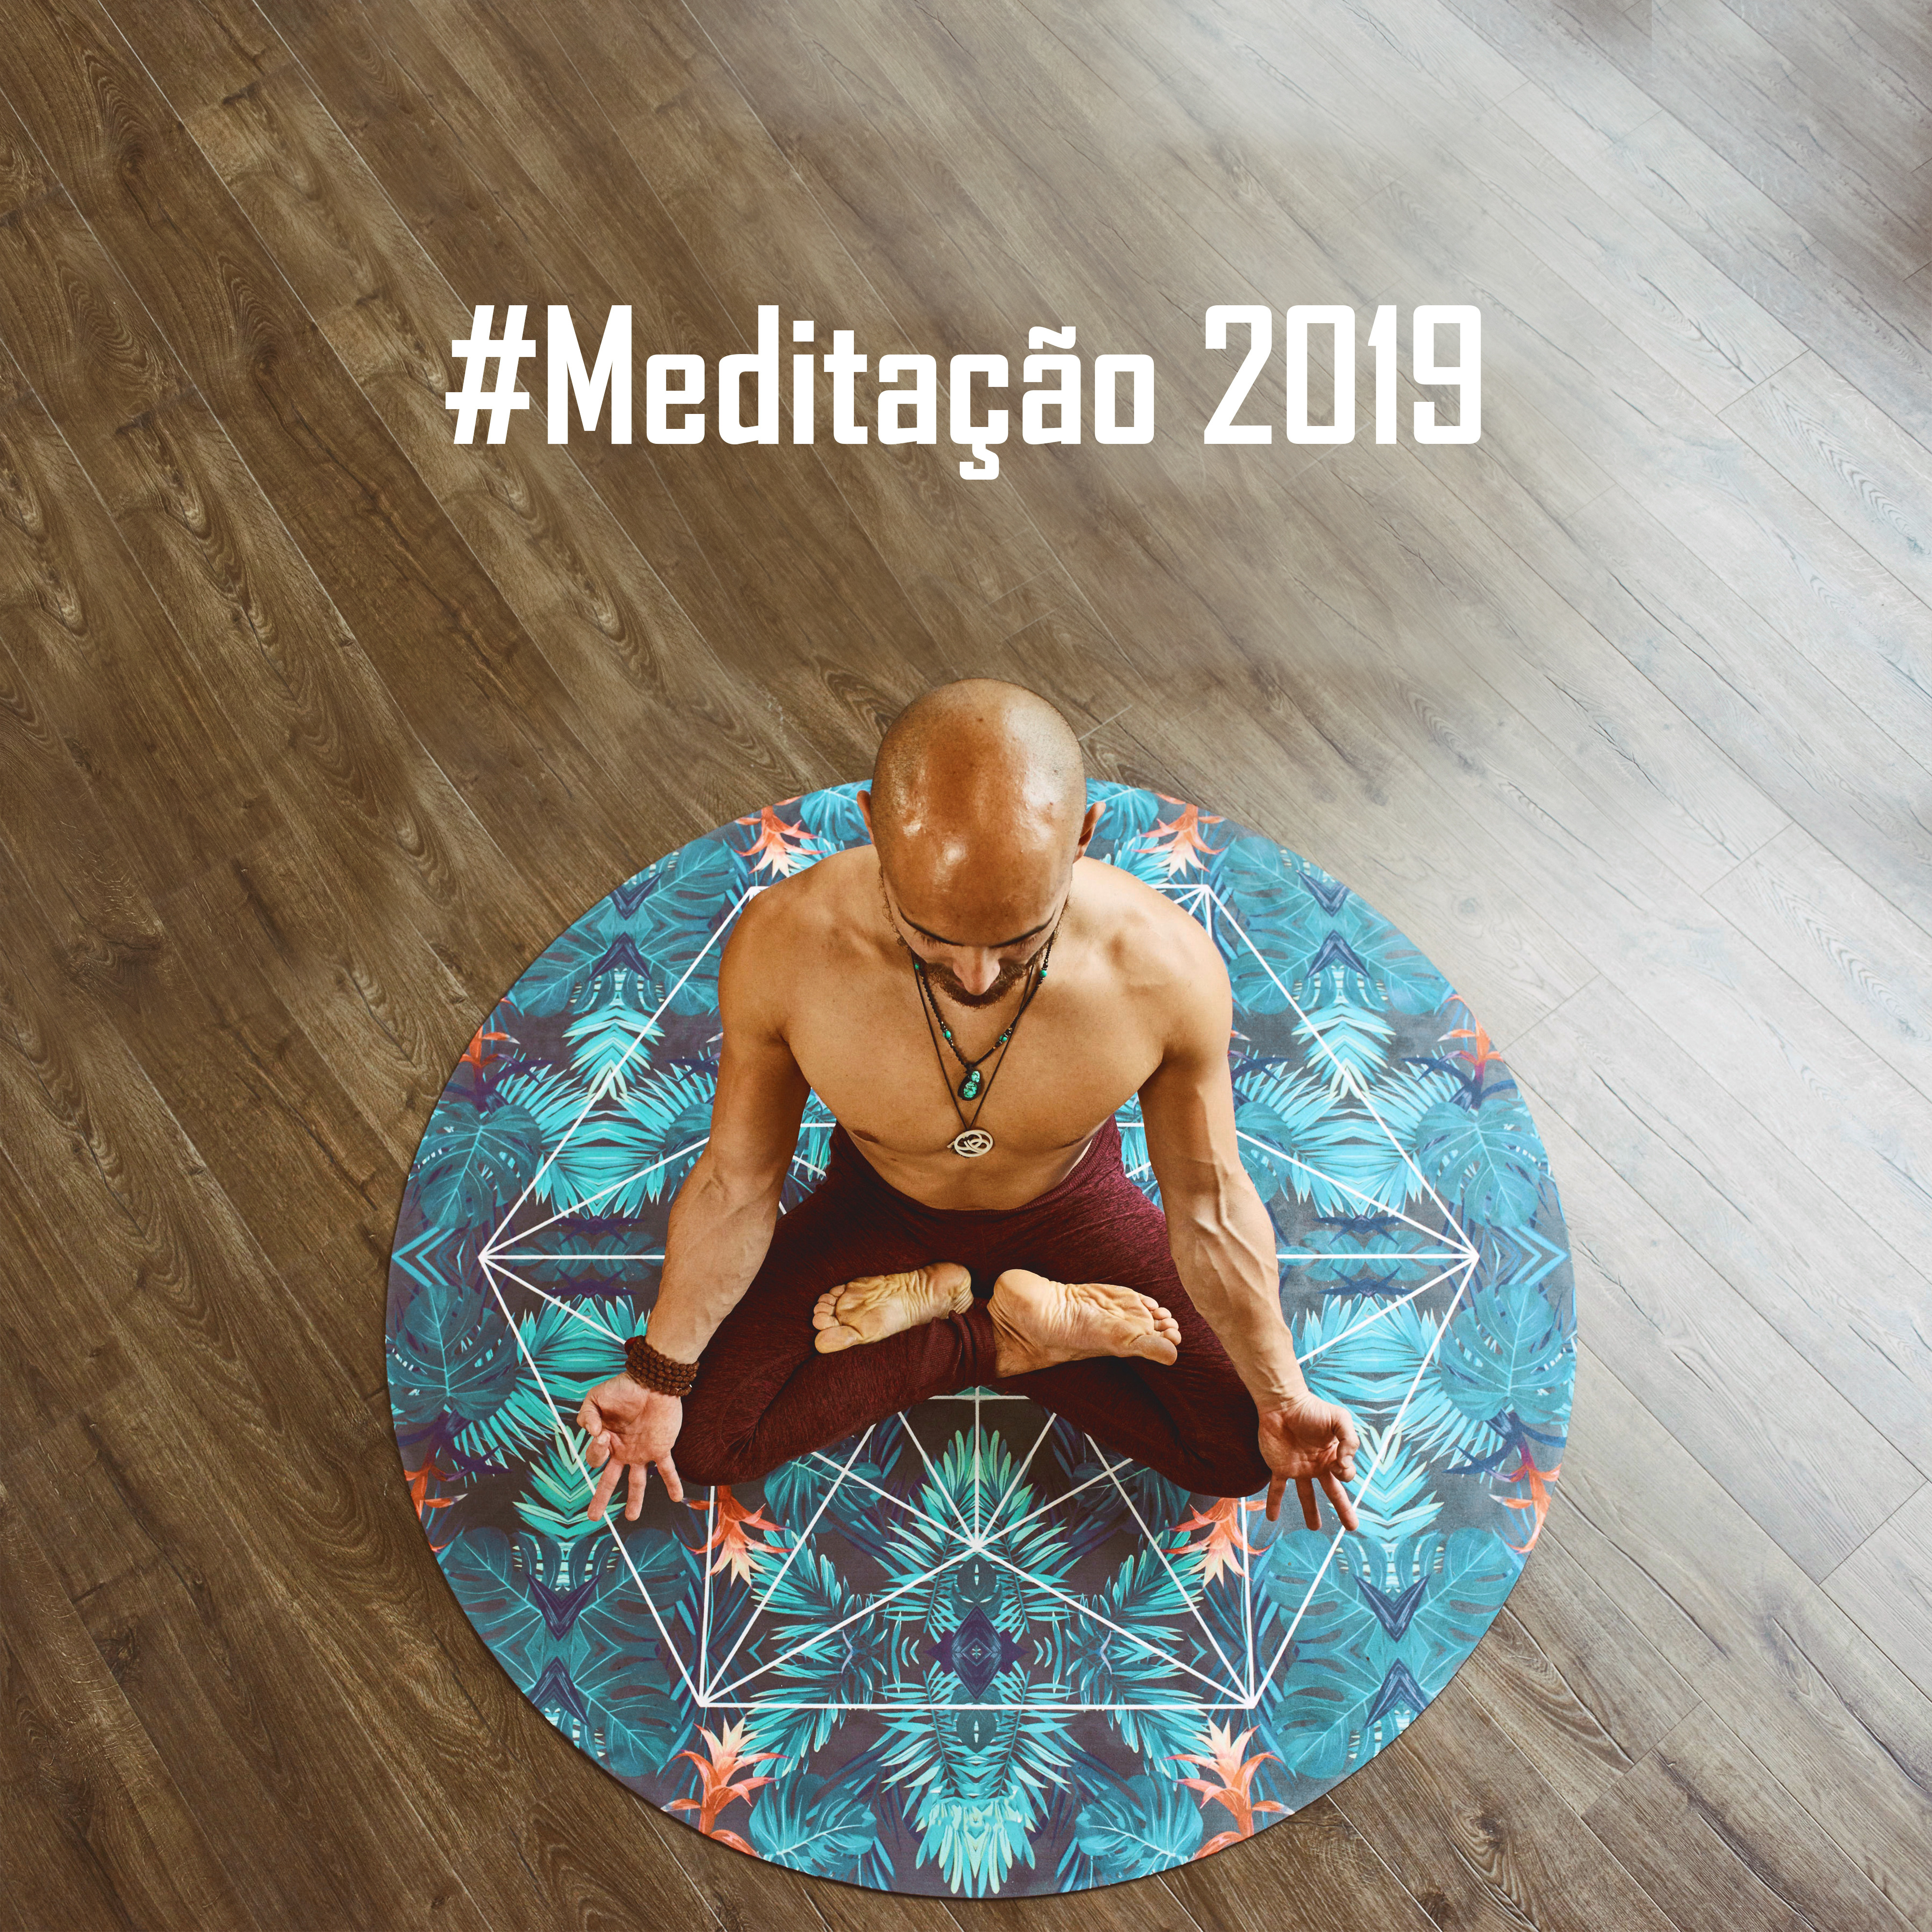 Medita o 2019: Mu sica New Age para Relaxamento, Dormir, Harmonia Interior, Despertar Espiritual, Medita o Profunda, Mu sica Zen, Mu sica de Yoga 2019